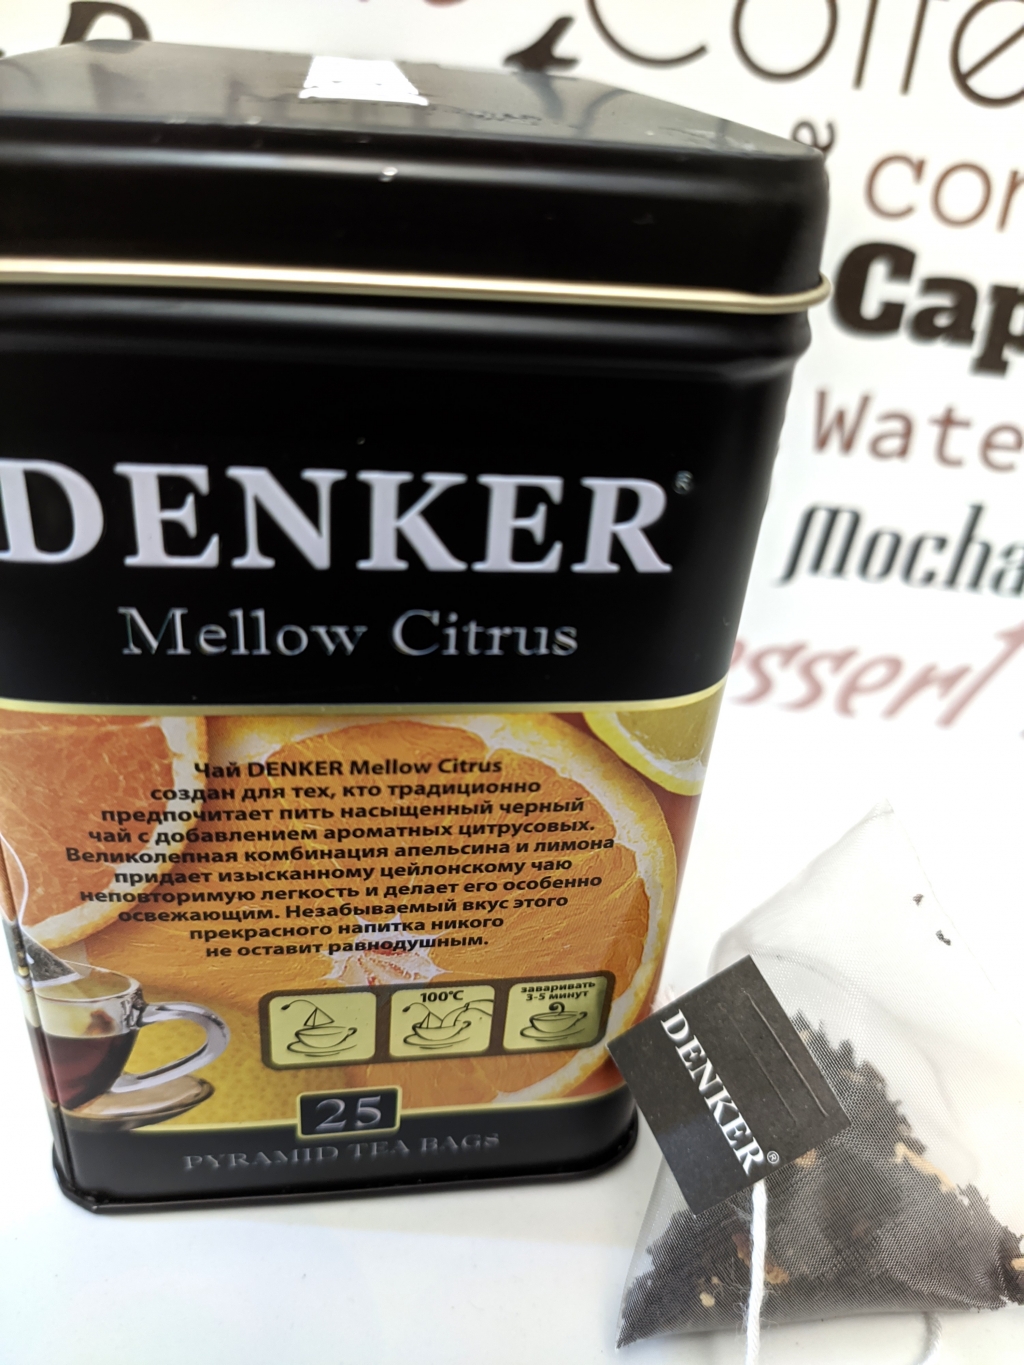 Denker Mellow Citrus черный чай - Очень ароматный чай